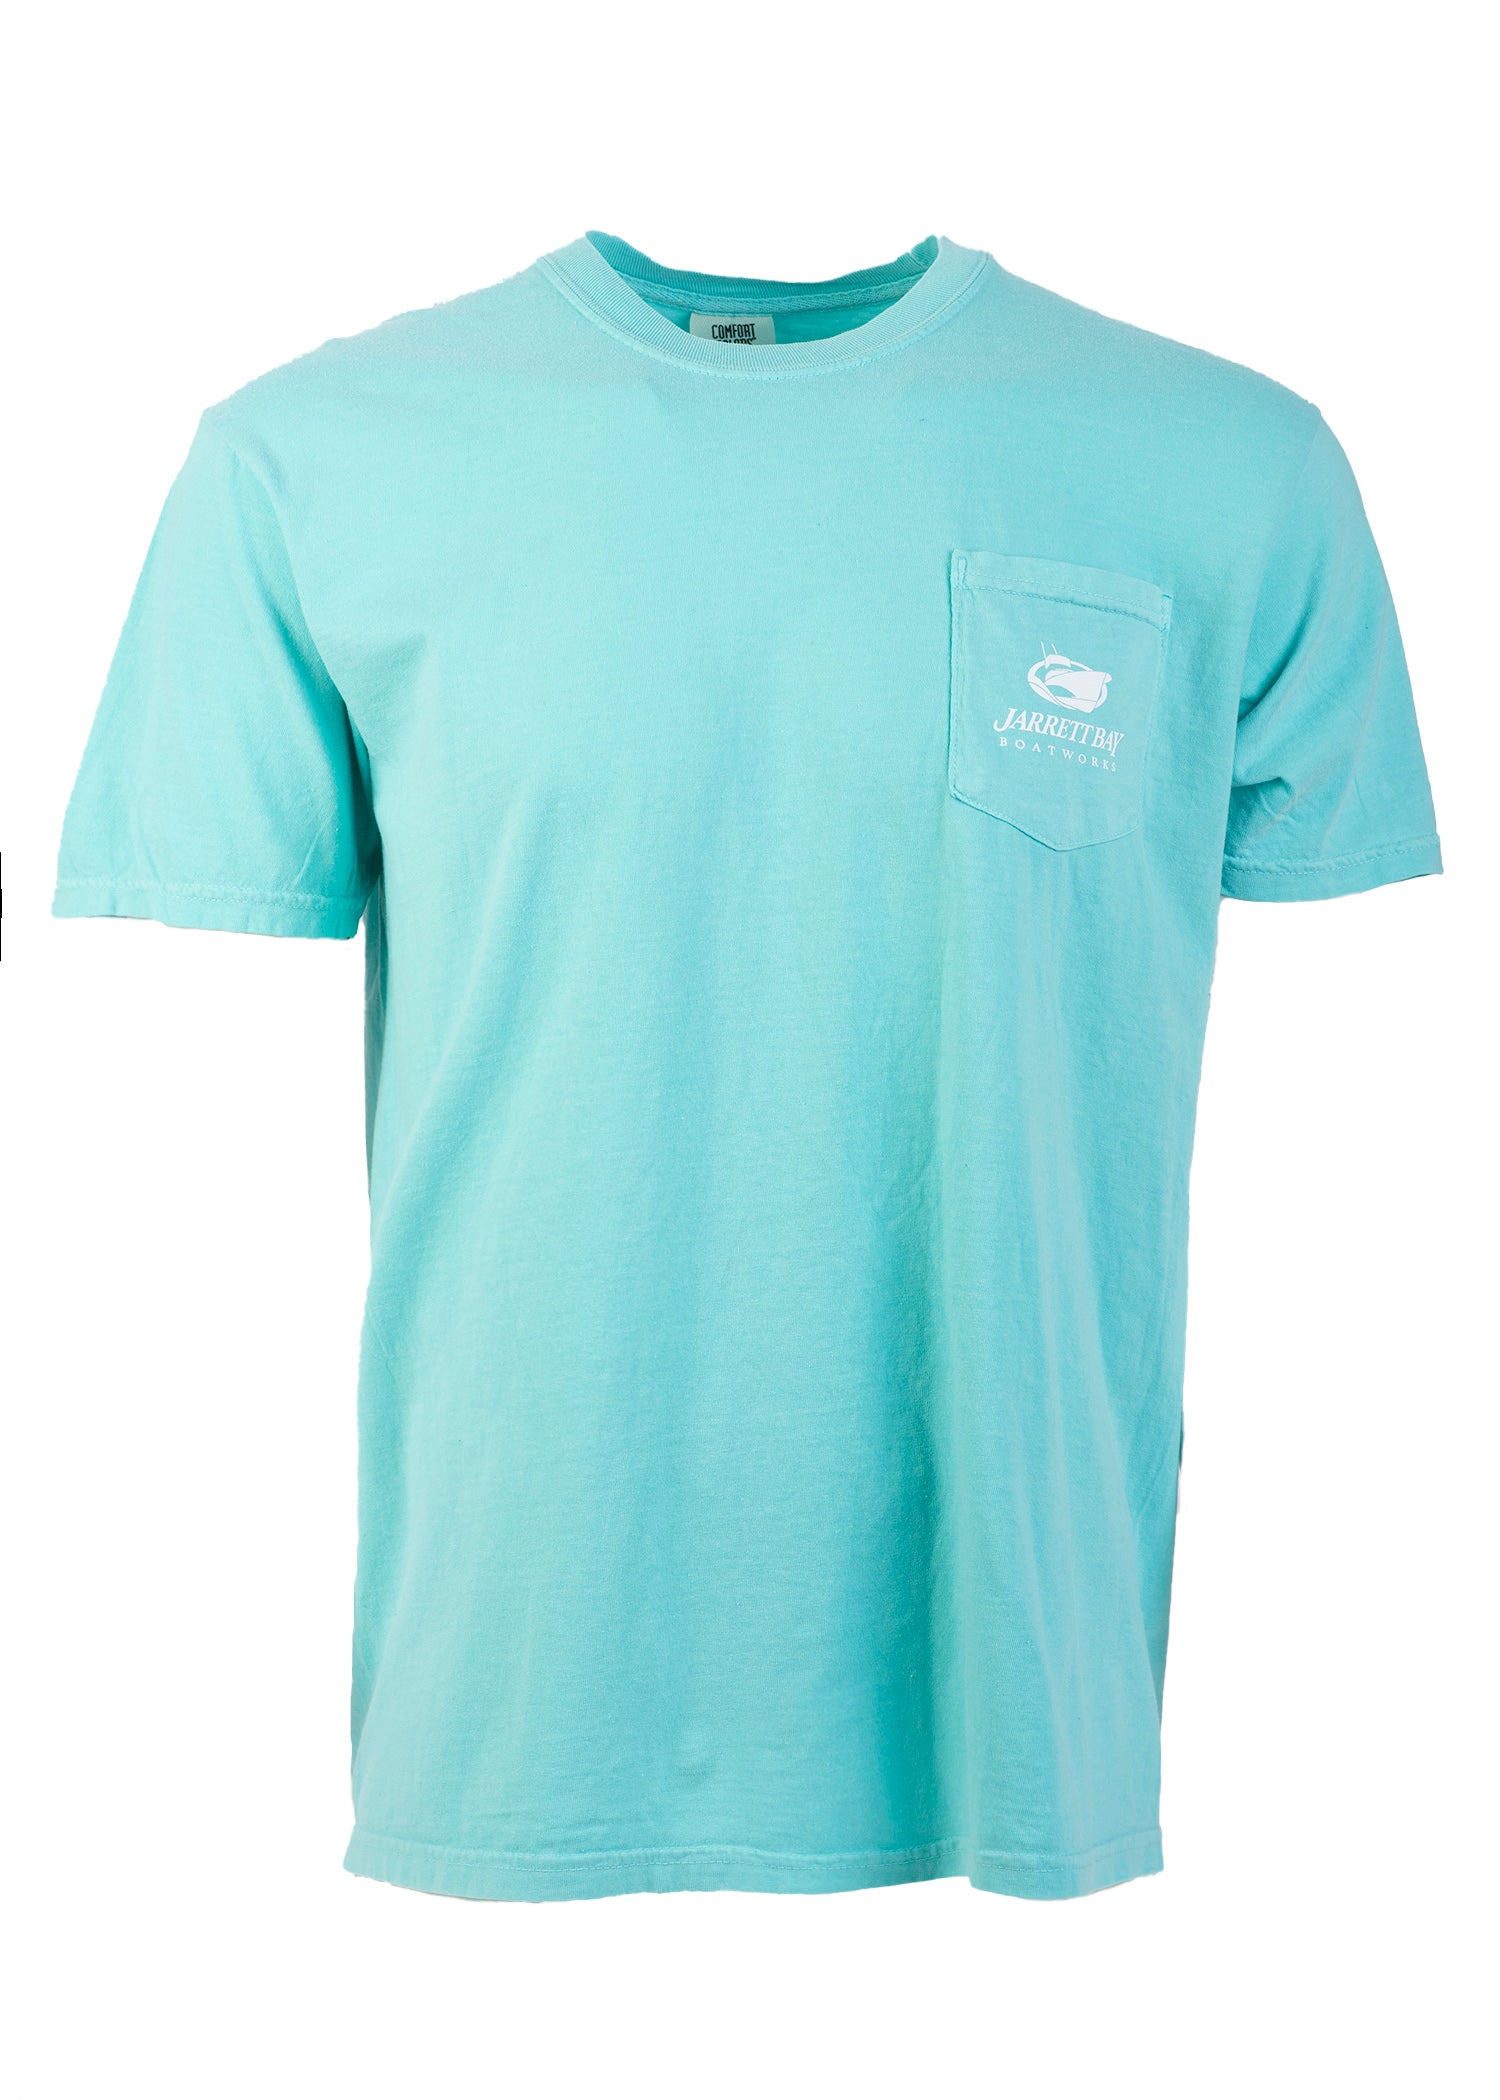 LPG Apparel Co. Big Rock Sportfish Premium Cotton T-Shirt